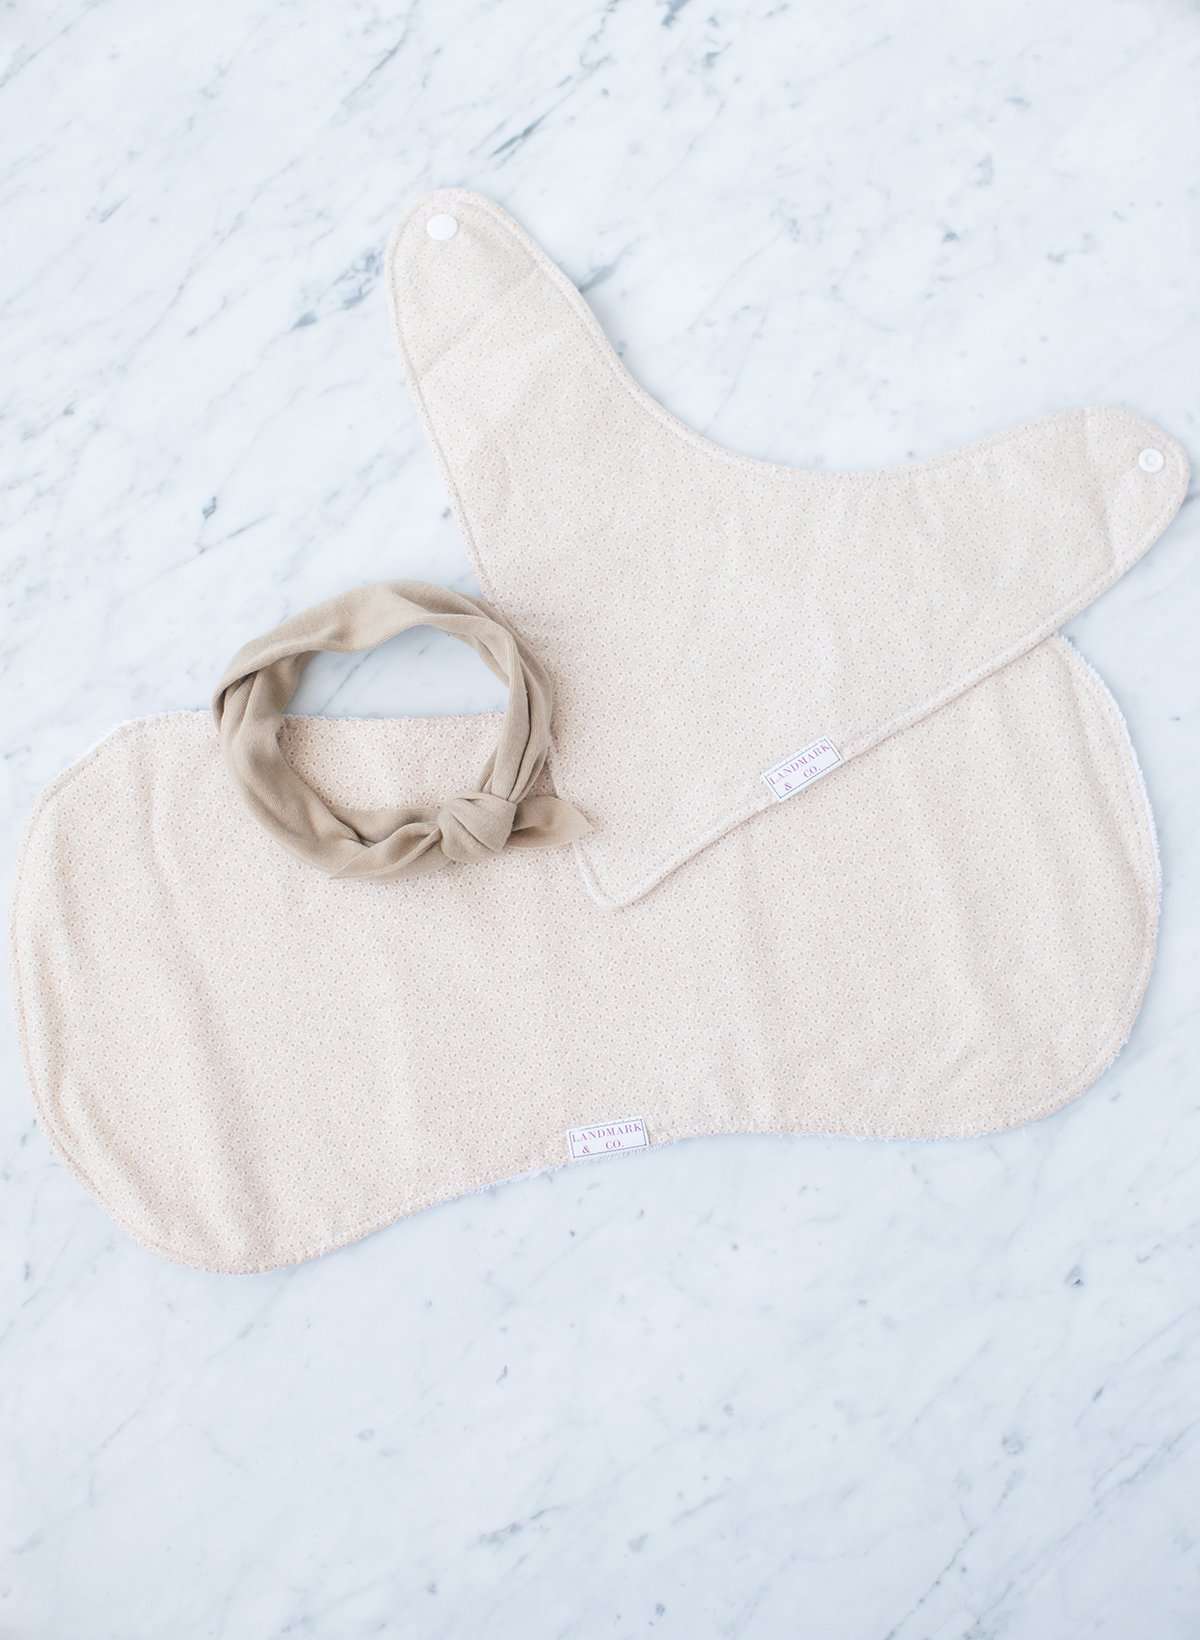 Baby gift set with burp cloth, bandana and headband